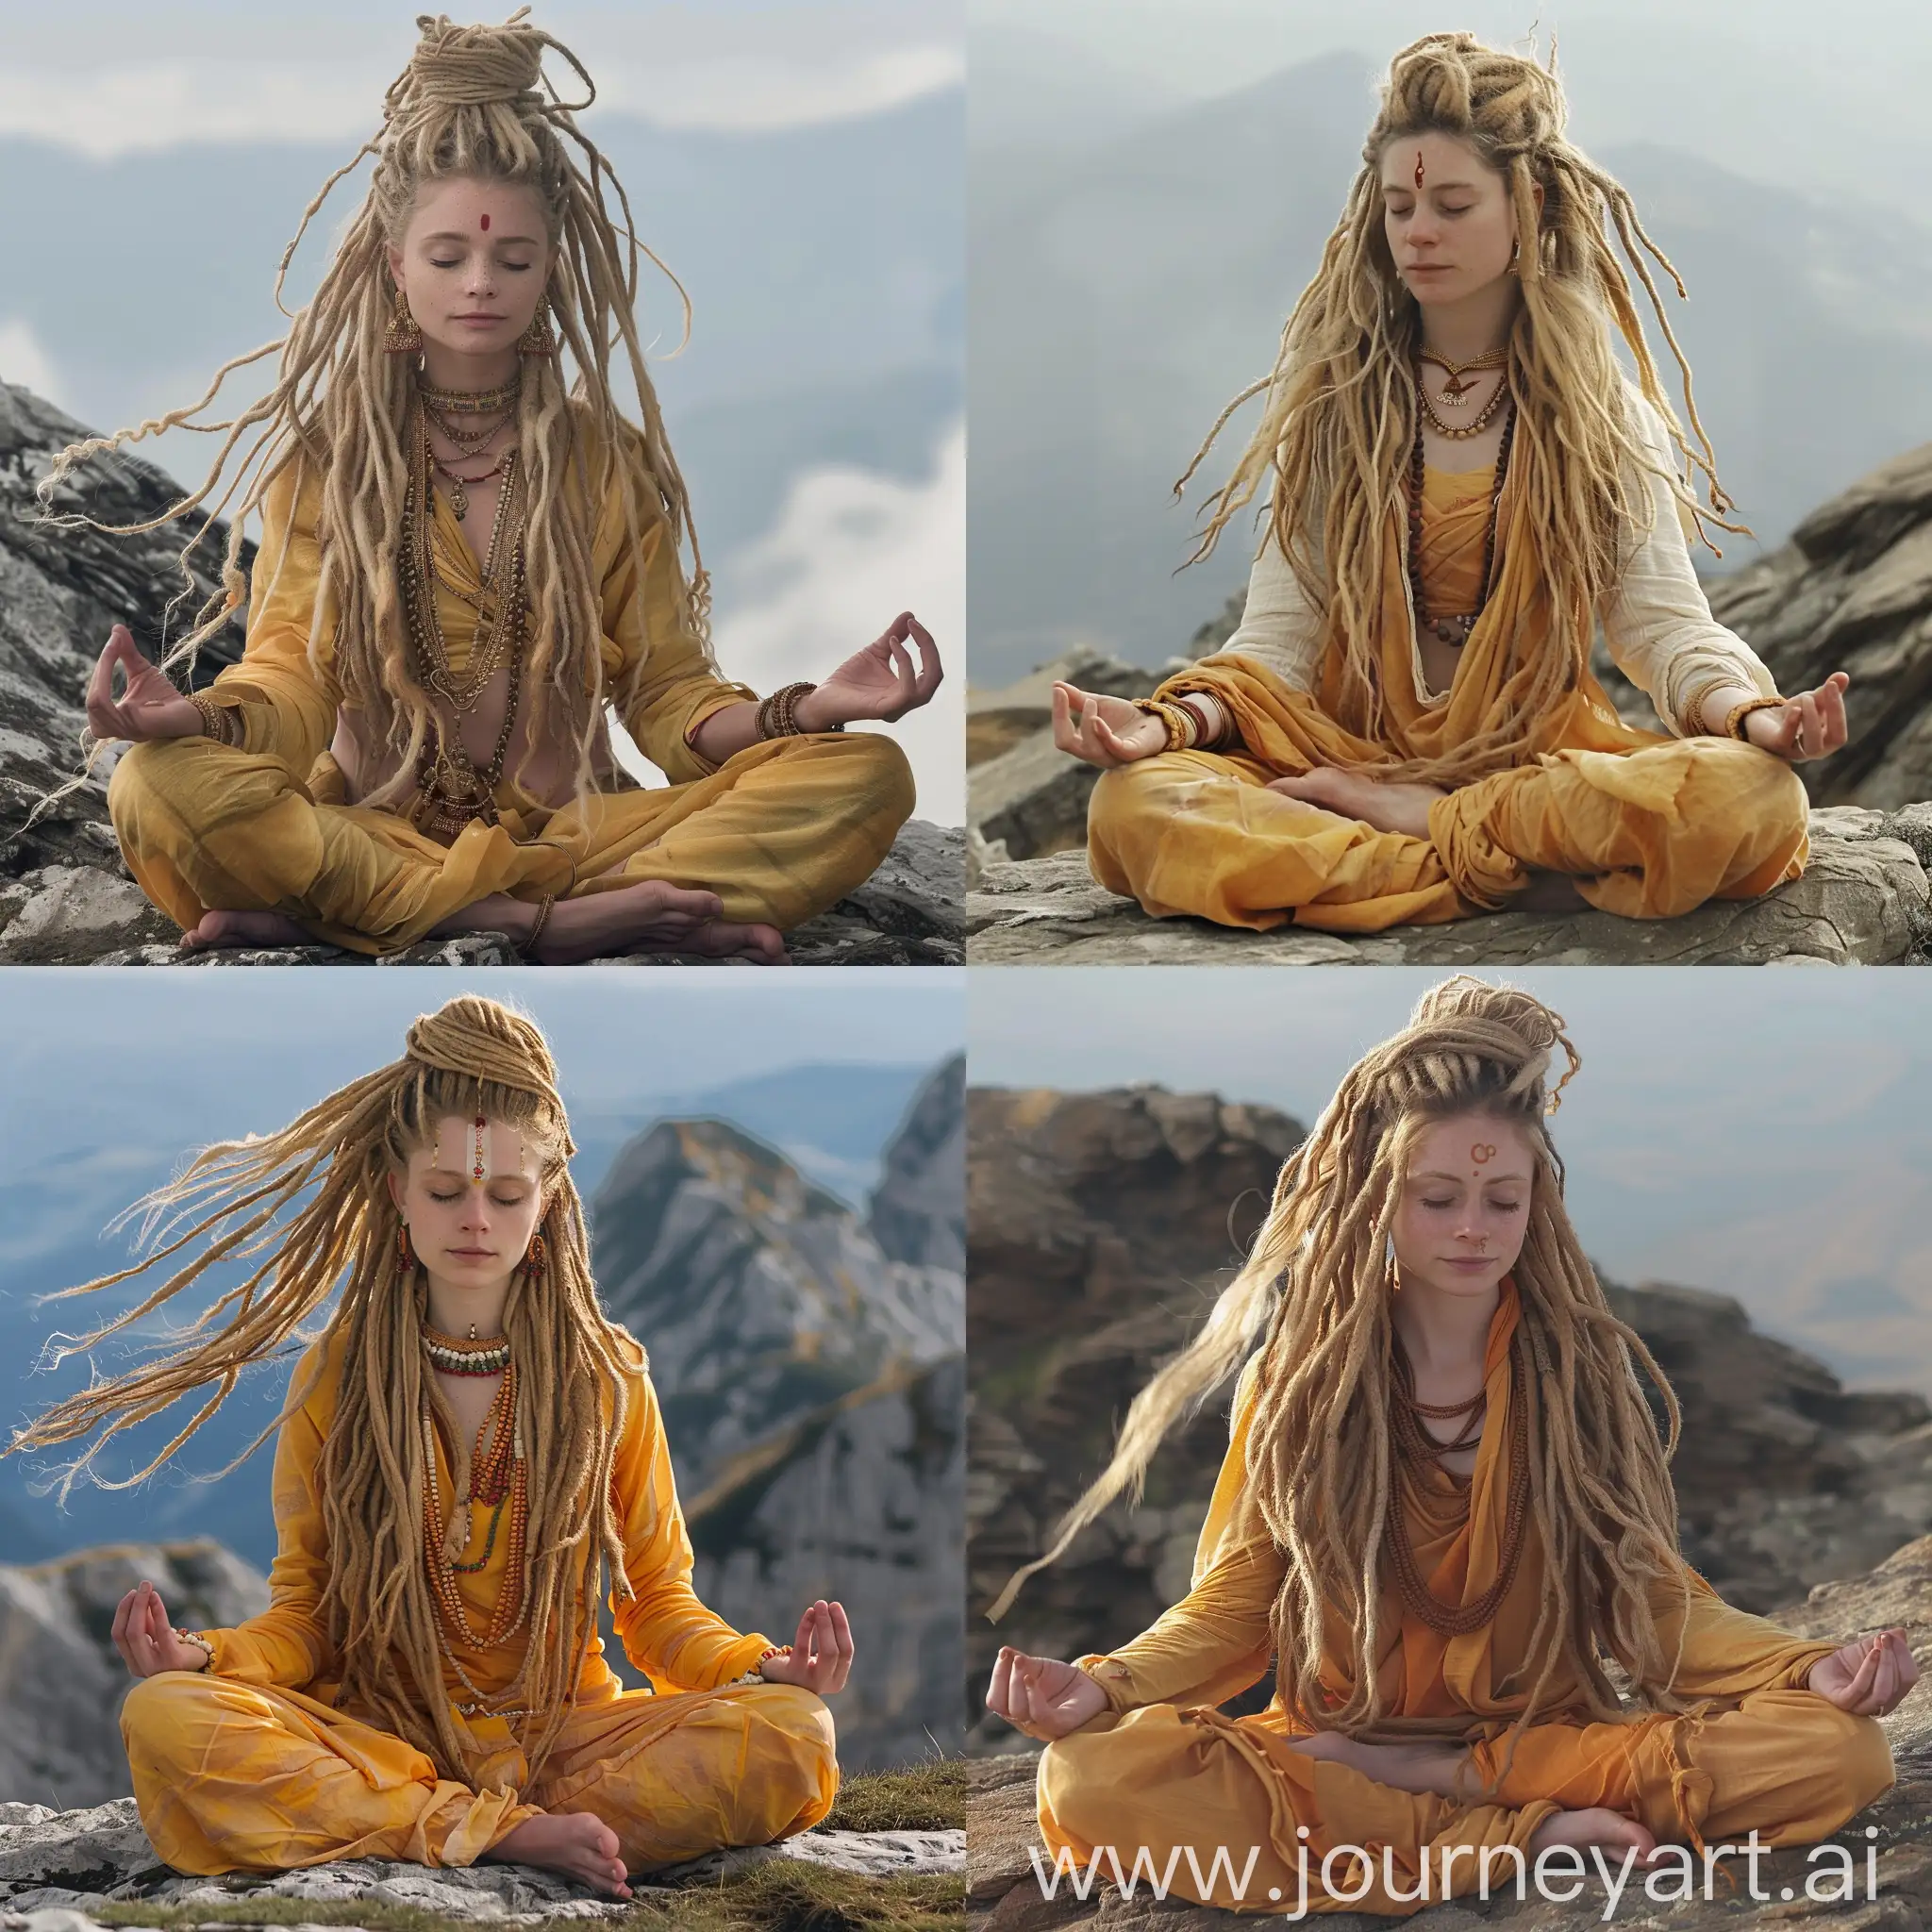 Shakti yogini meditating. She has long blonde dreadlocks and wears zaffron clothes. She is in top of a mountain